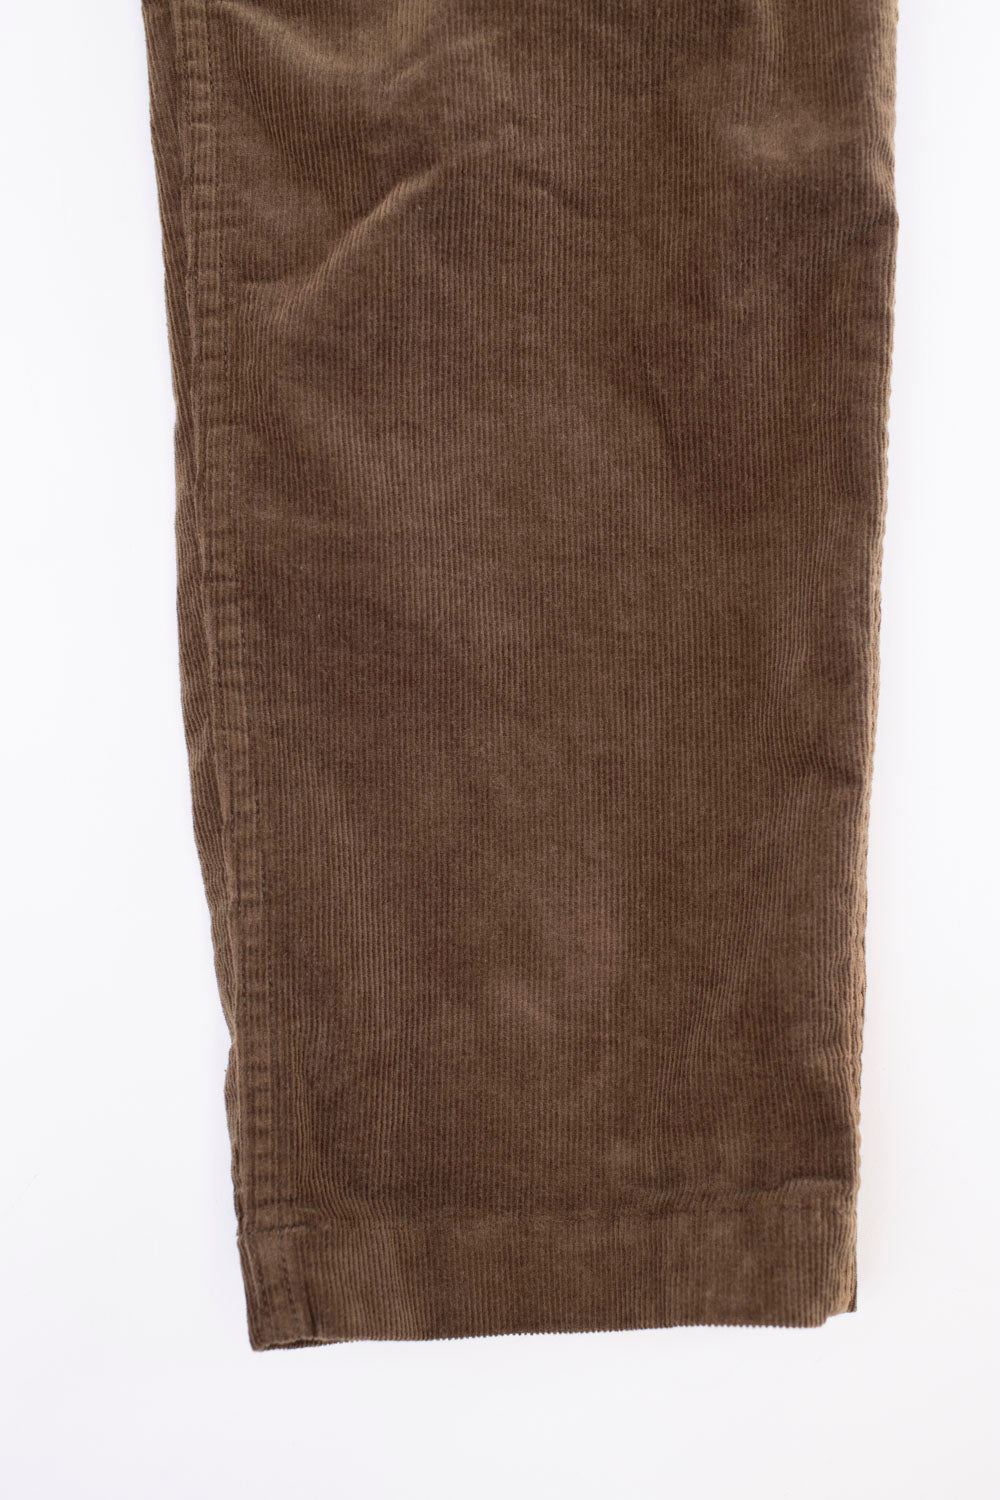 03-1002-C53M - New Yorker Pant Stretch Corduroy - Brown